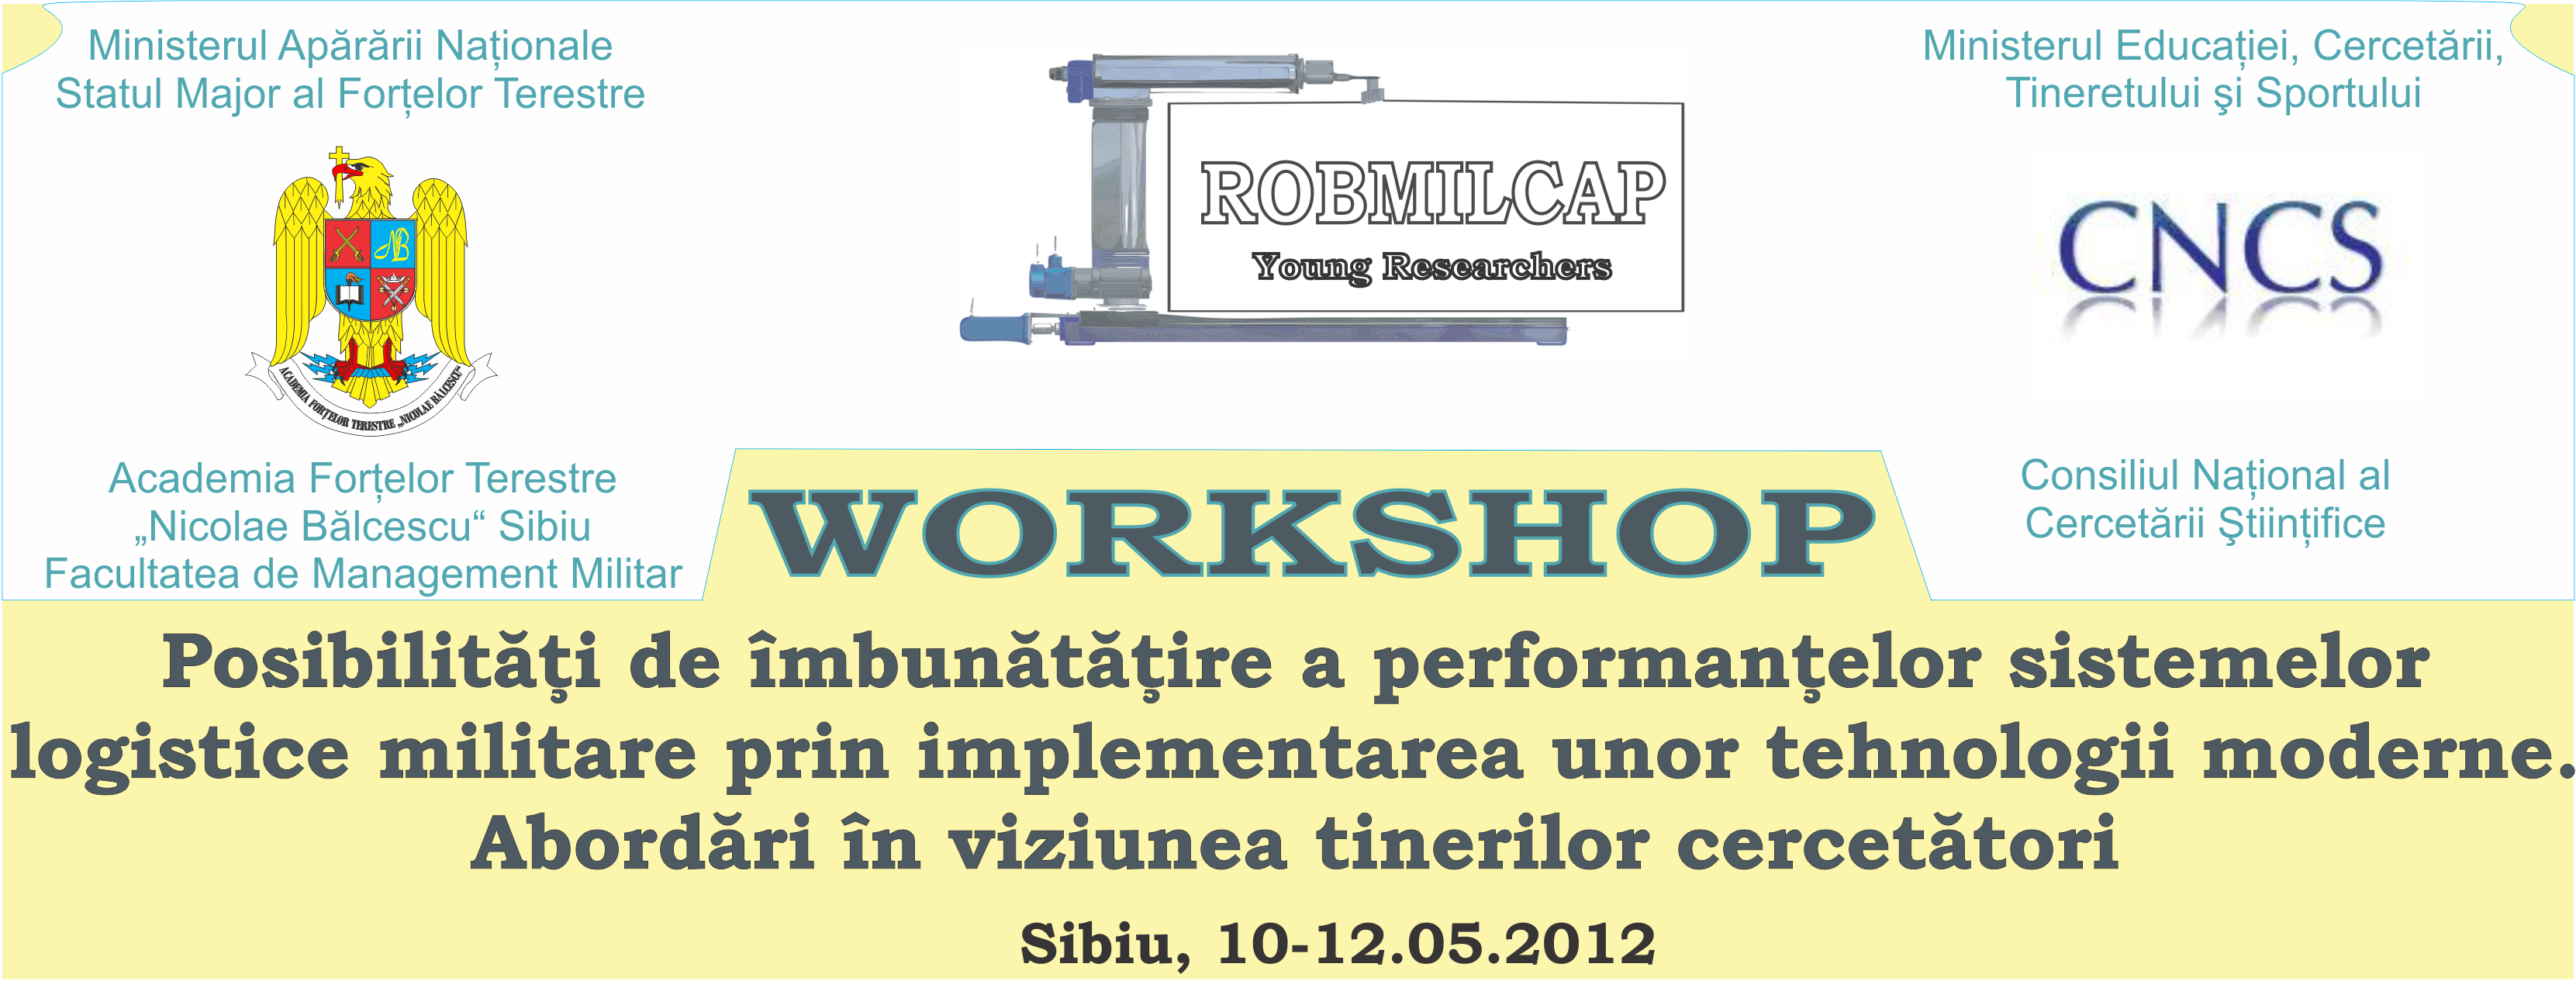 Workshop - 10-12.05.2012